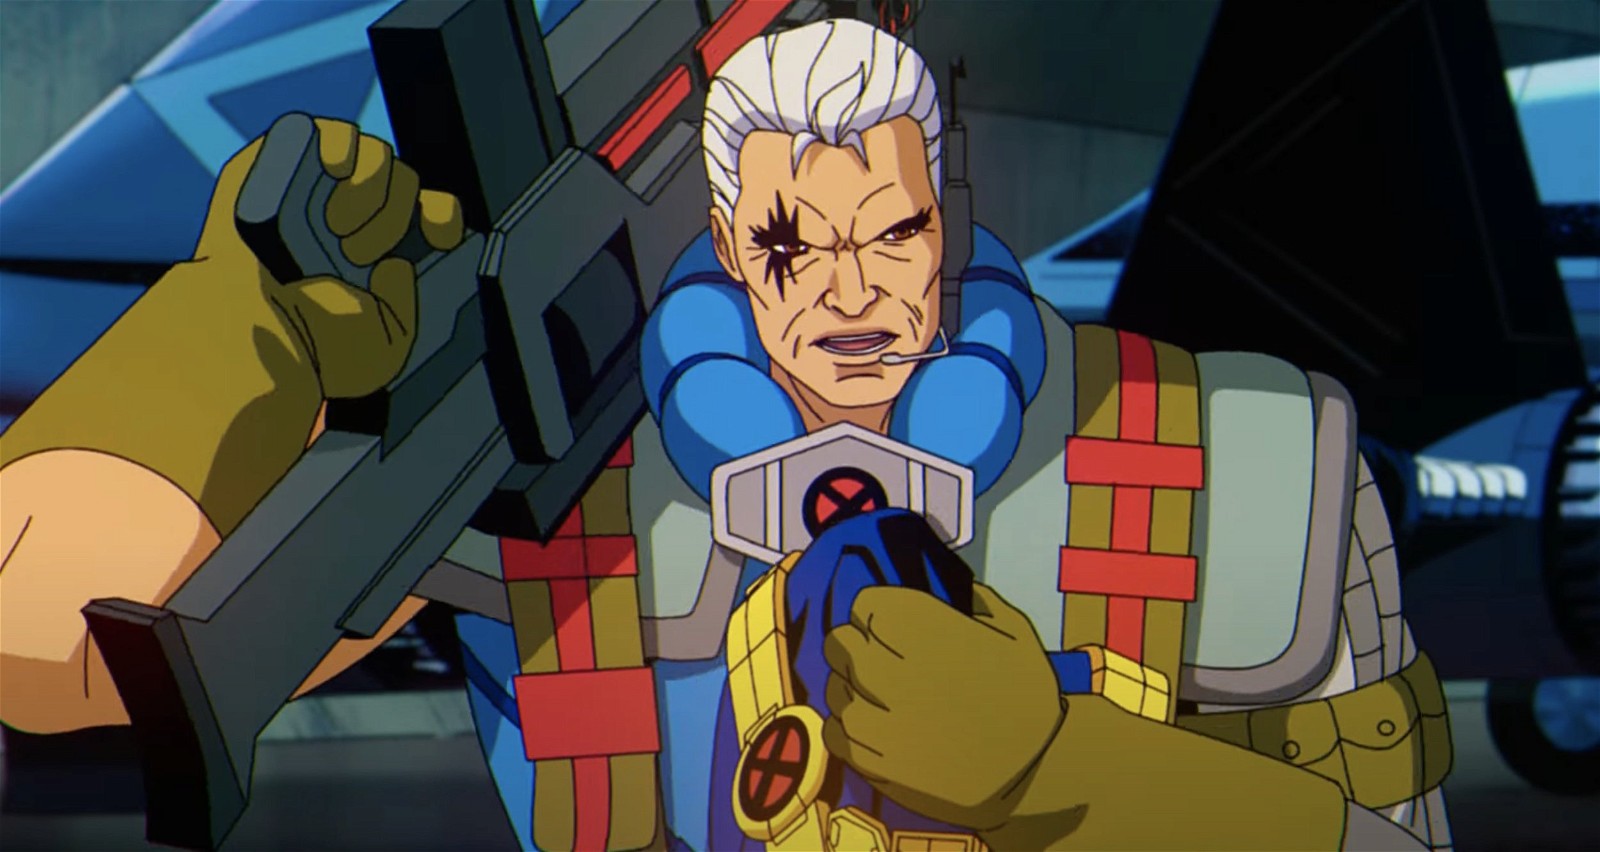 Cable and Cyclops debate on X-Men costume in X-Men '97